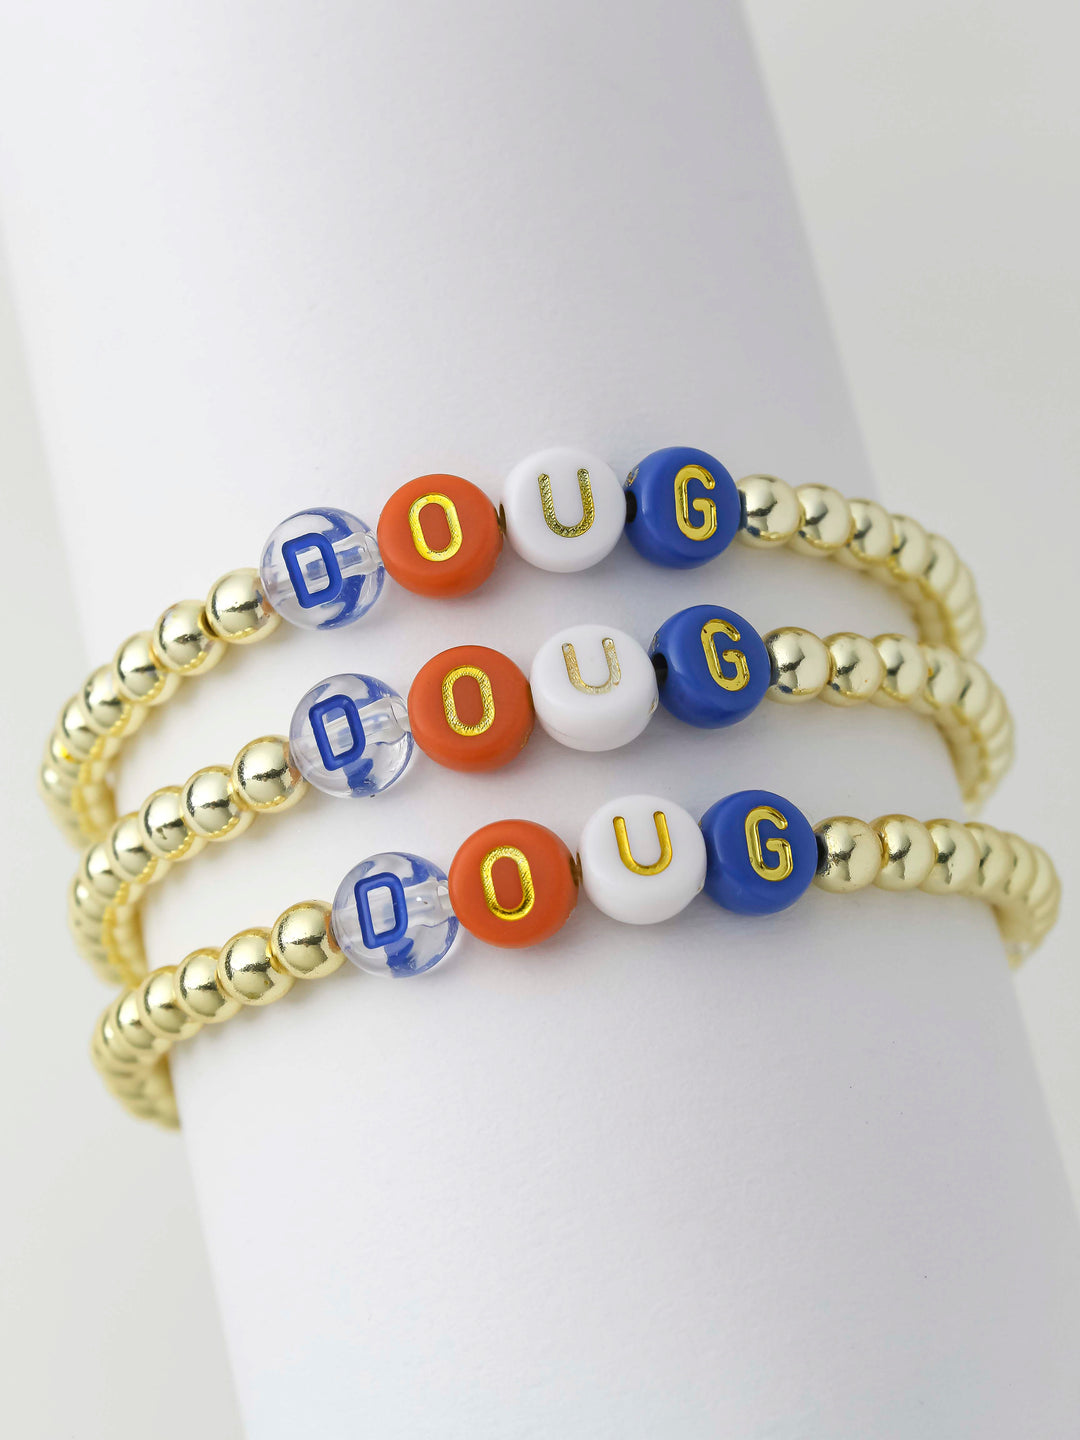 Doug Custom Bracelet